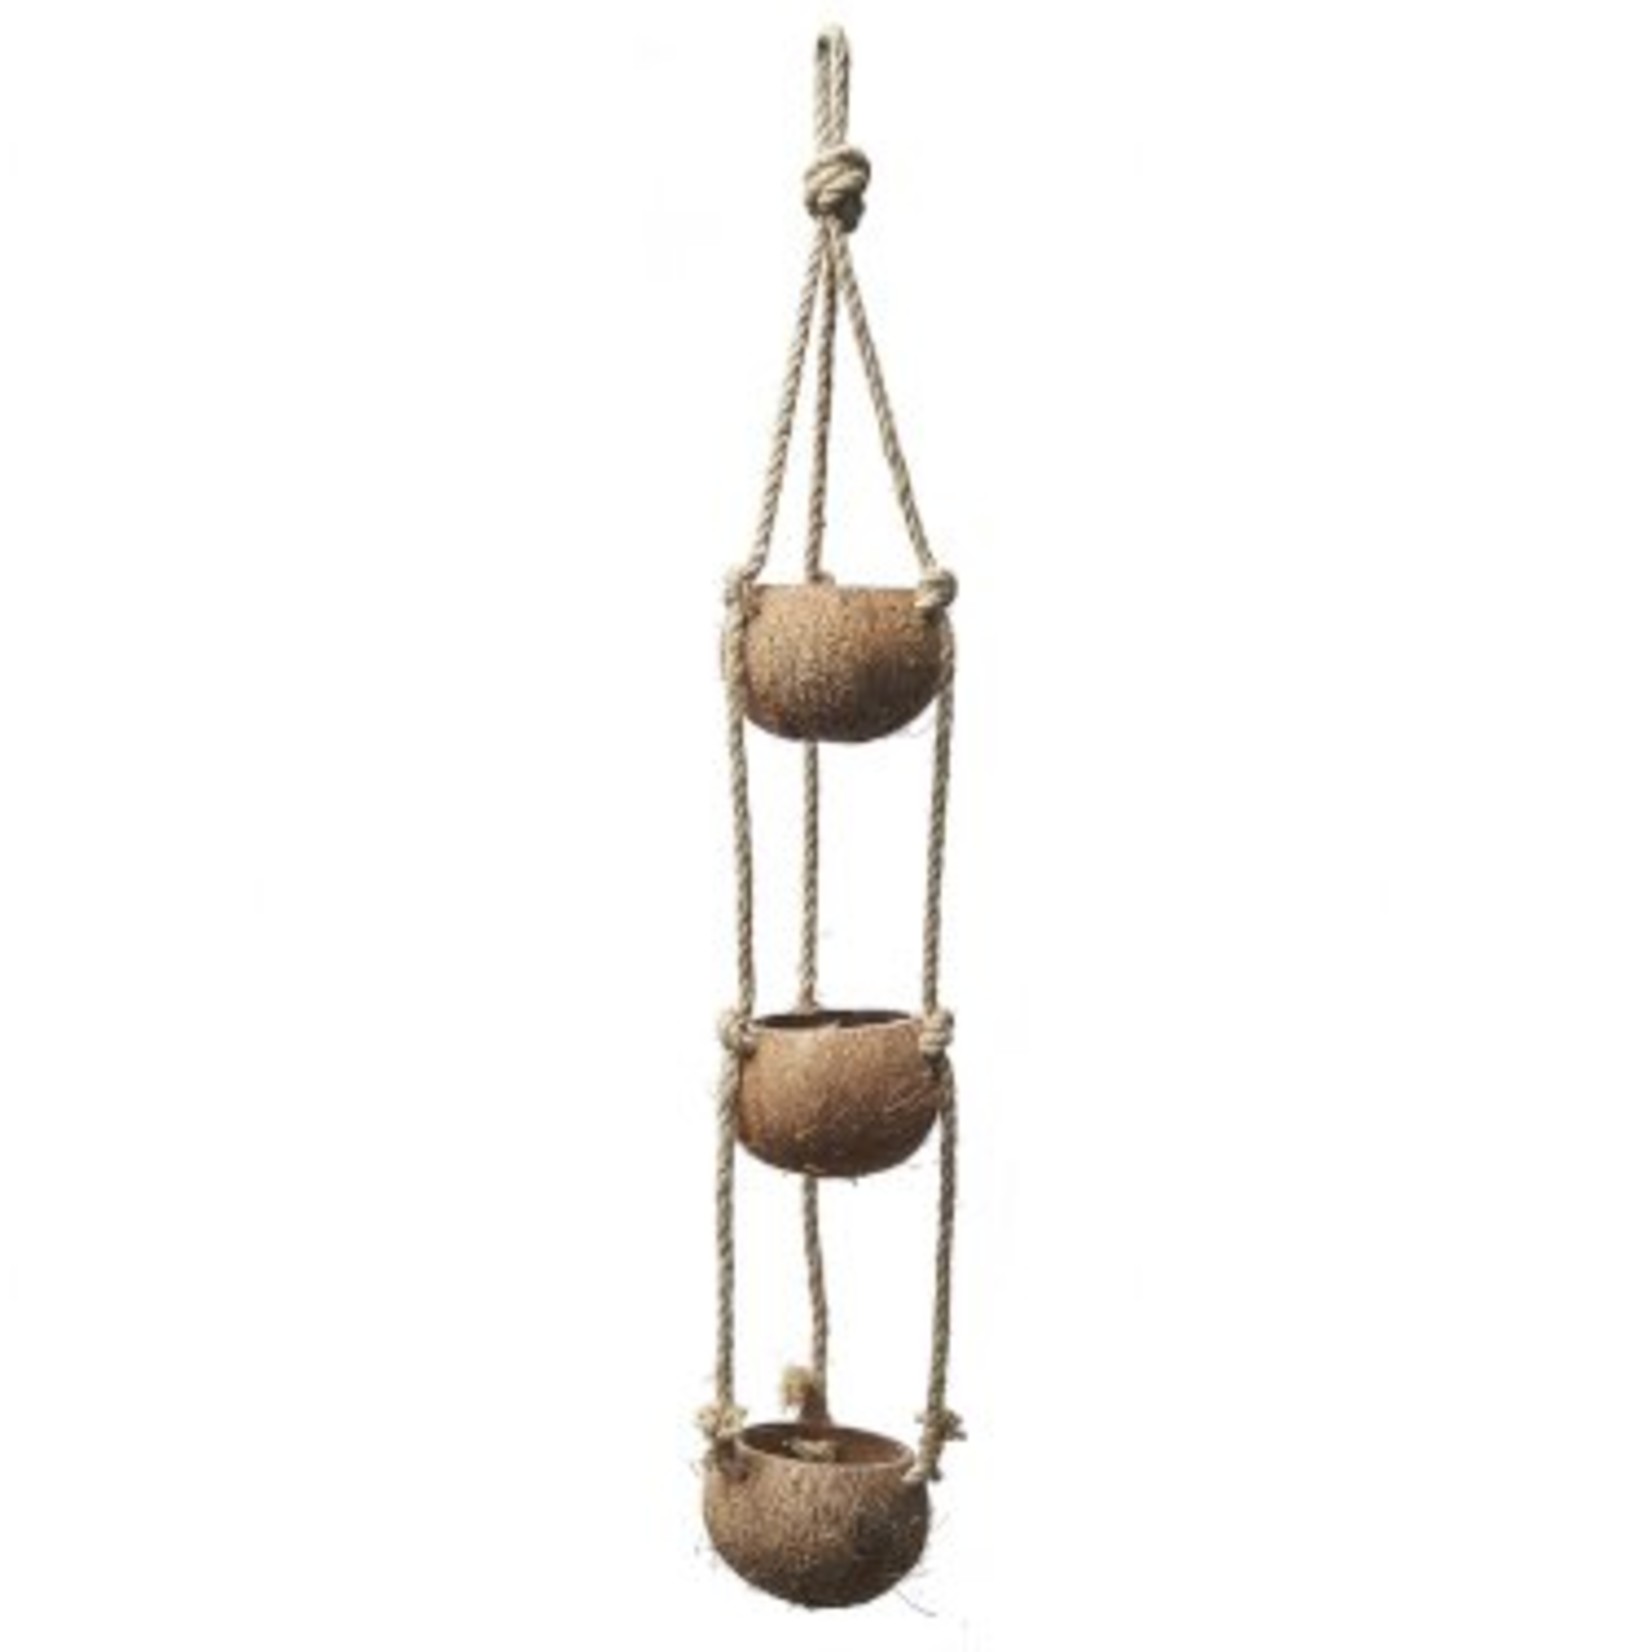 Coconut pendant